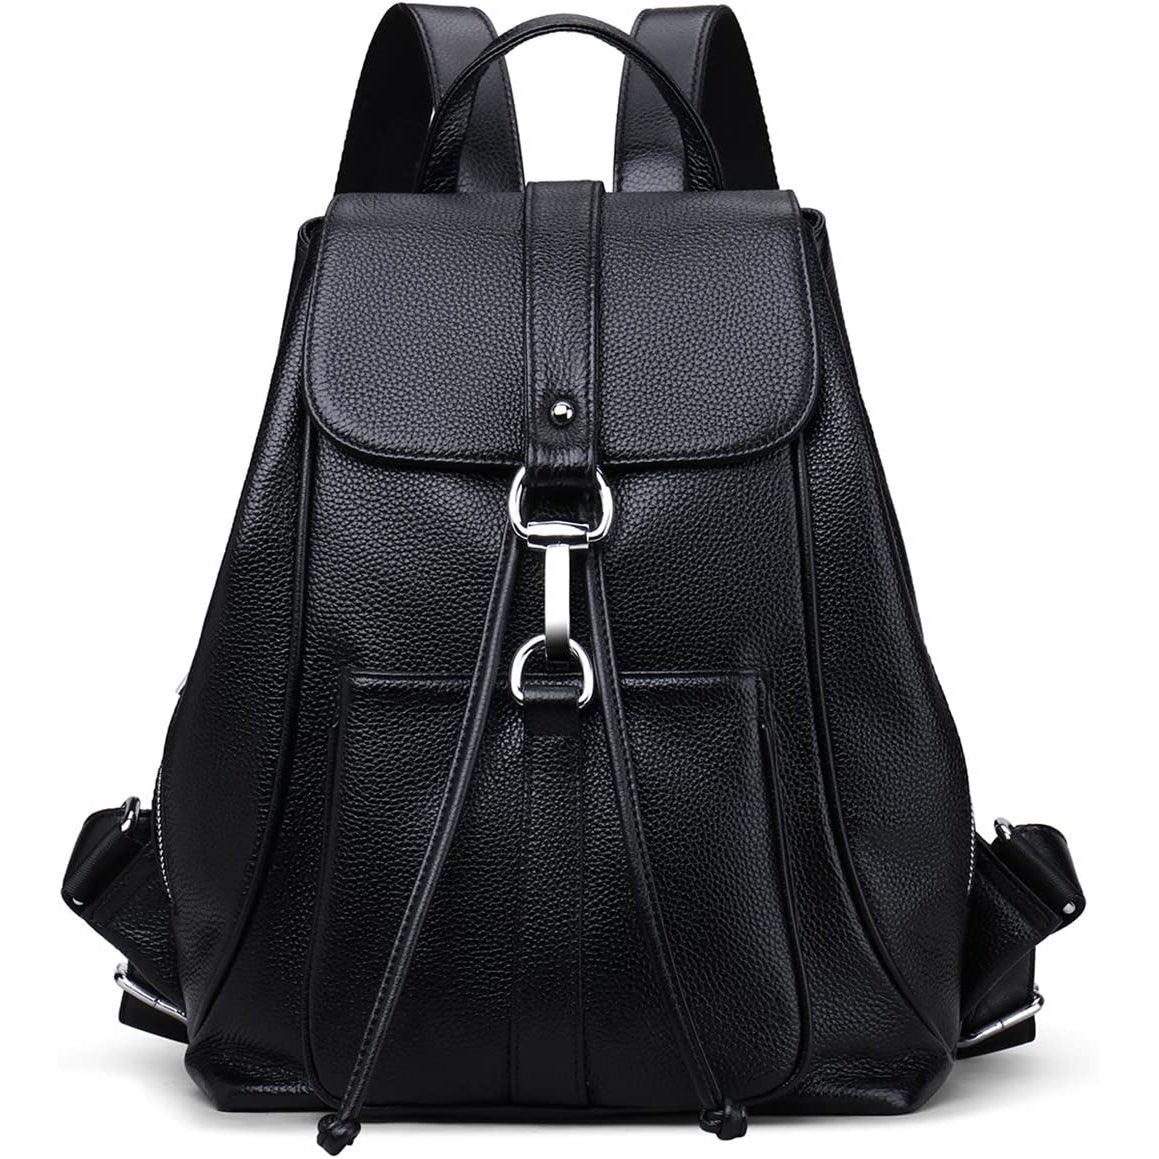 FR Fashion Co. 14" Genuine Leather Backpack - FR Fashion Co. 